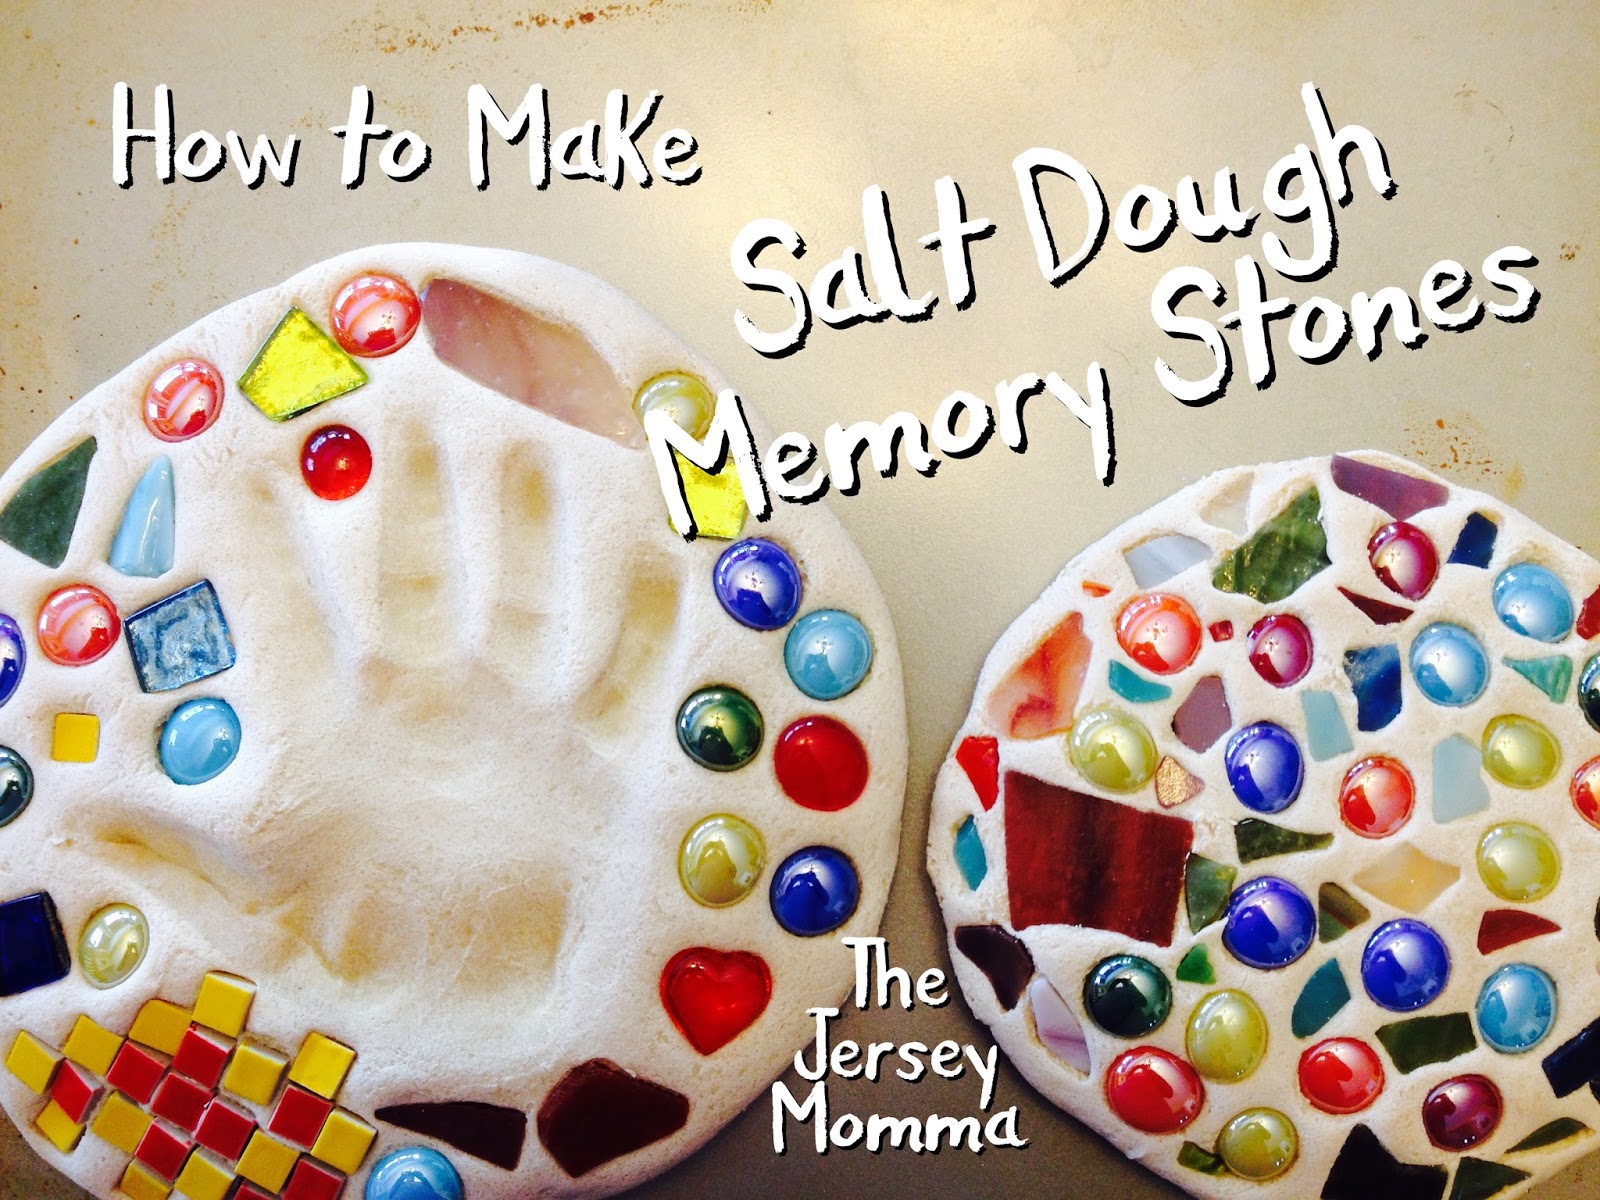 How to Make Salt Dough Memory Stones DIY: Easy Crafts for Kids